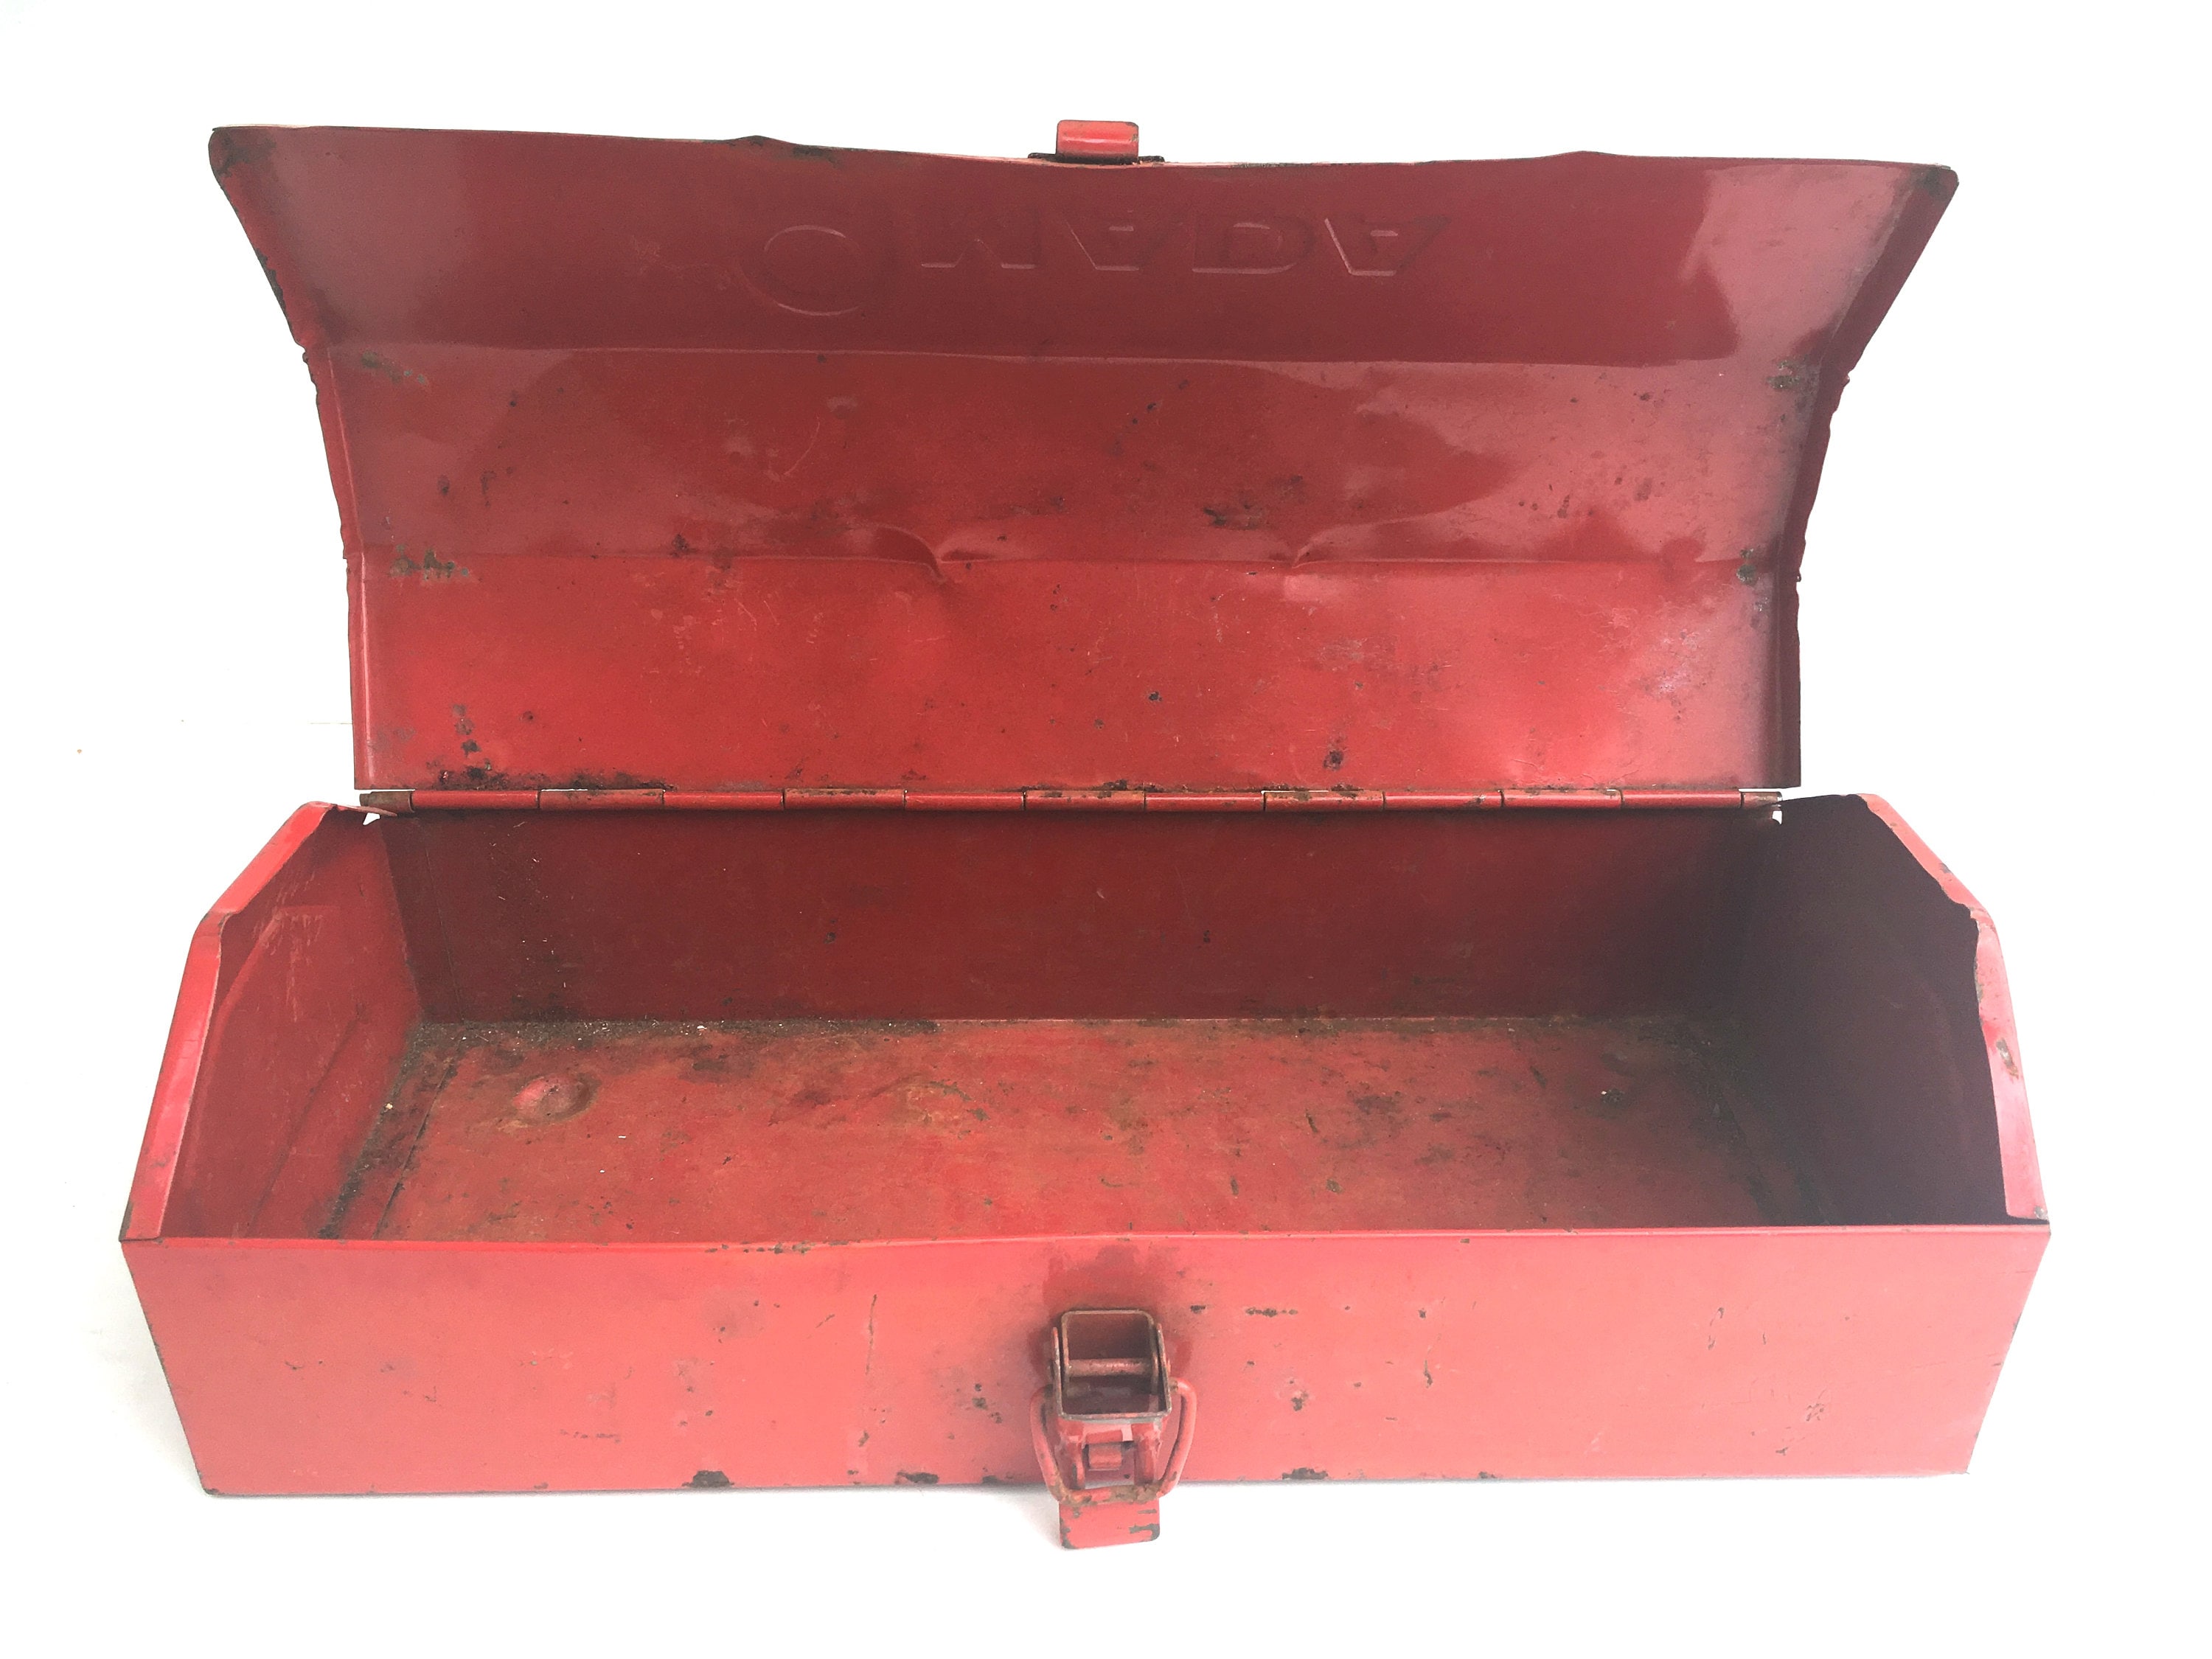 Vintage Red Toolbox Red Metal Tool Box Mada Brand Tool Storage Box  Industrial Decor 